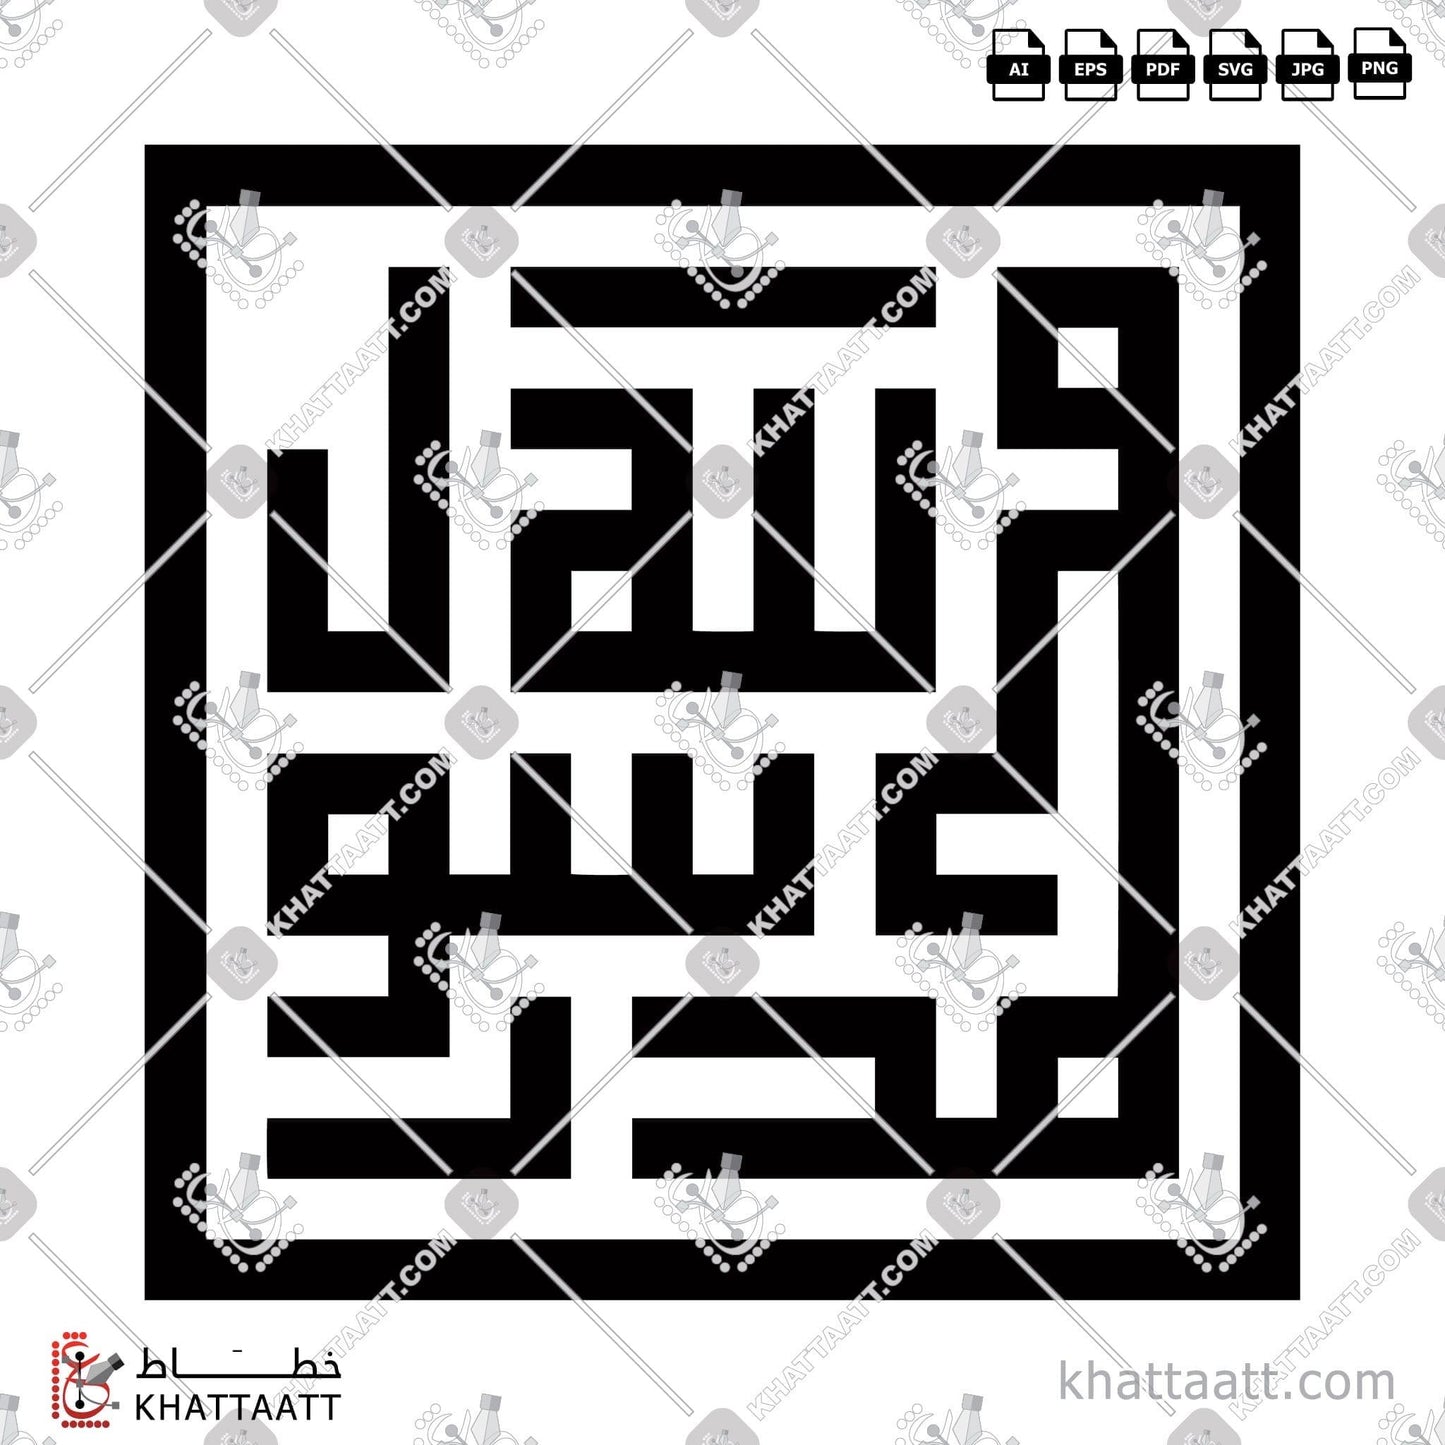 Download Arabic Calligraphy of Muhammad (ﷺ) محمد رسول الله in Kufi - الخط الكوفي in vector and .png